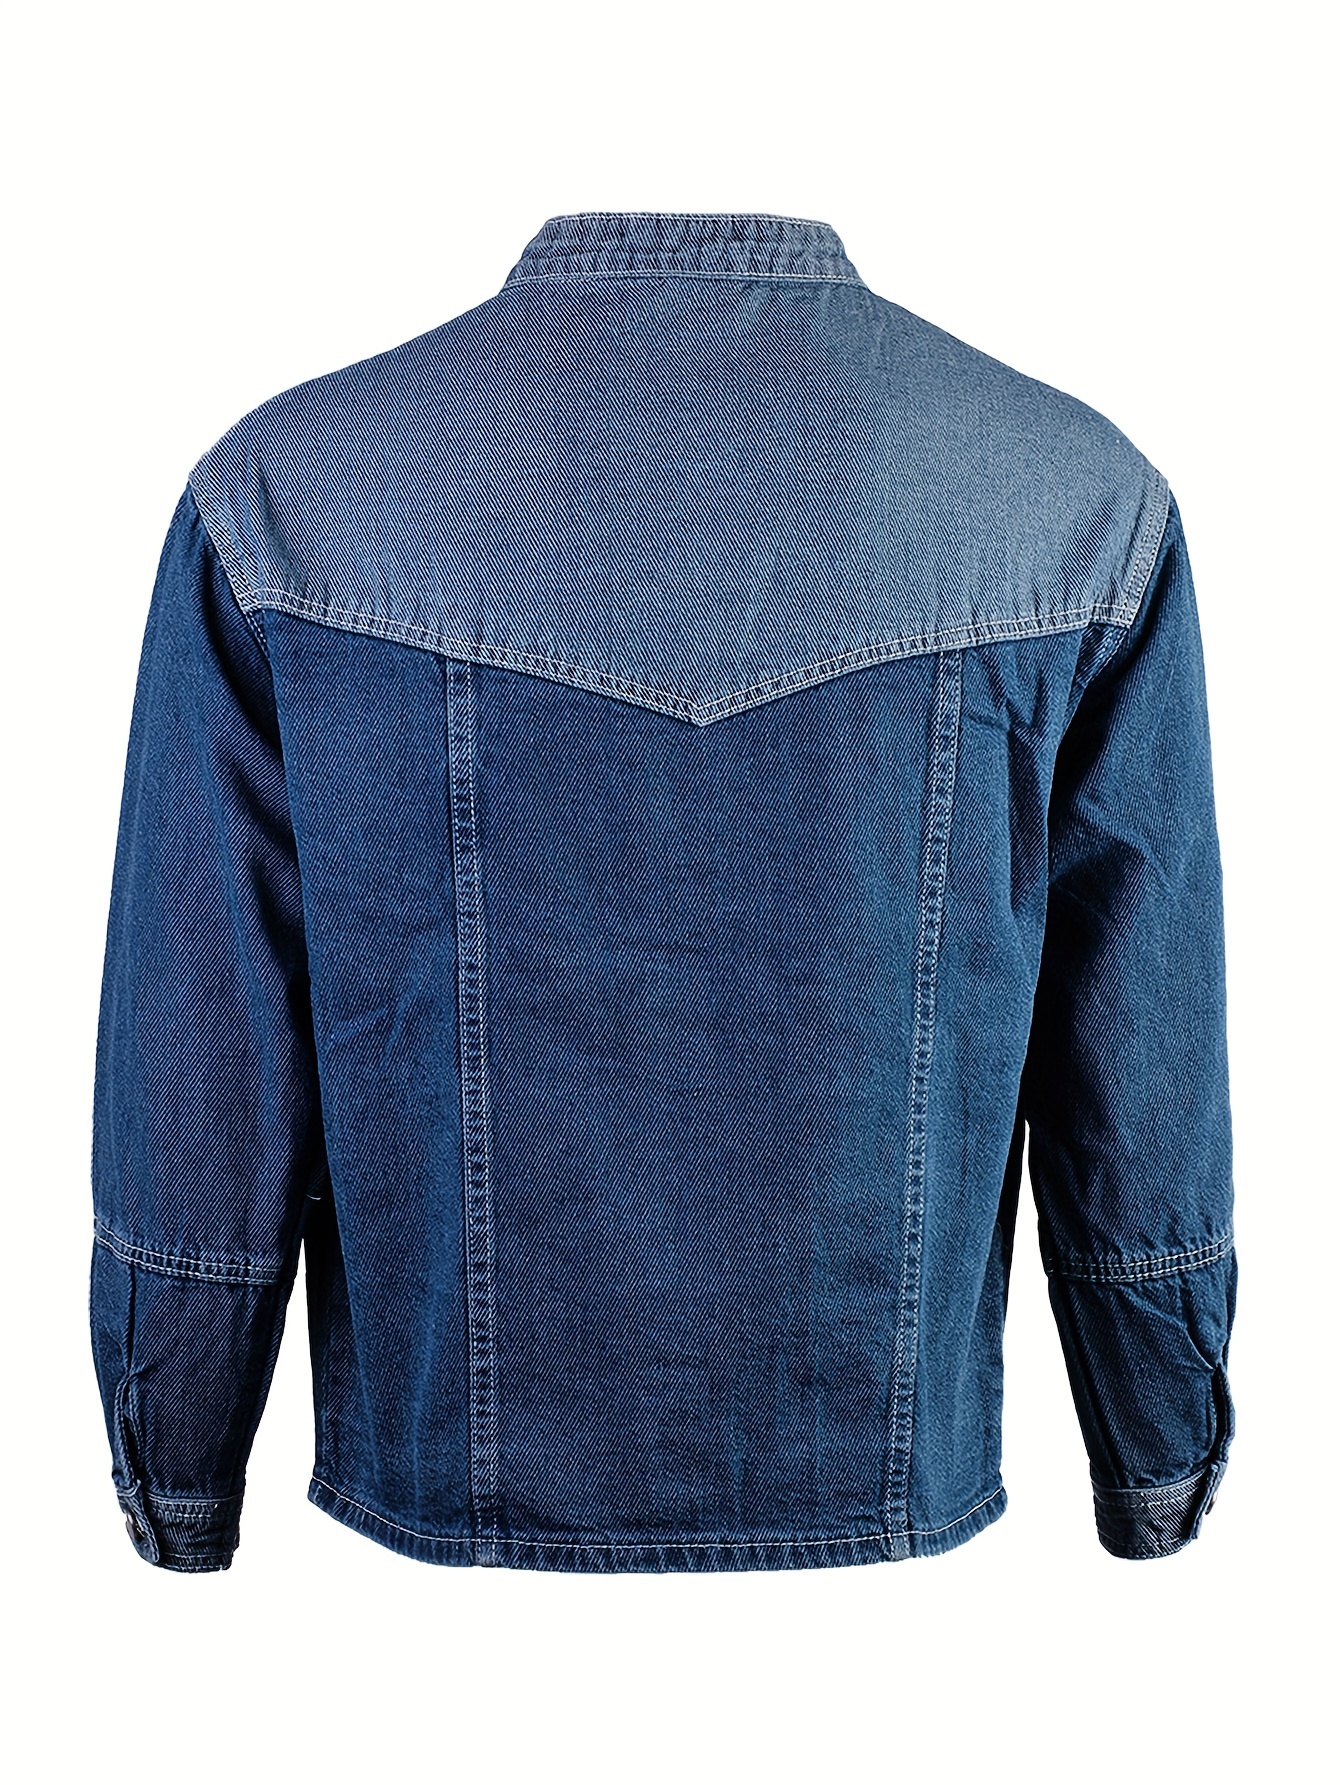 Men's Stylish Solid Comfy Denim Jacket With Pockets, Active